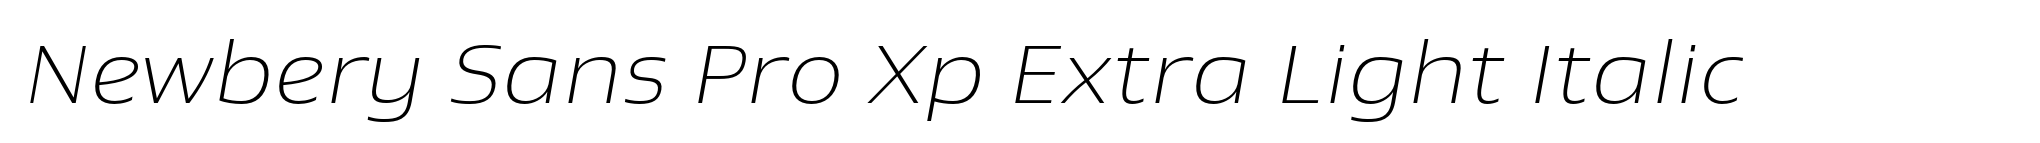 Newbery Sans Pro Xp Extra Light Italic image